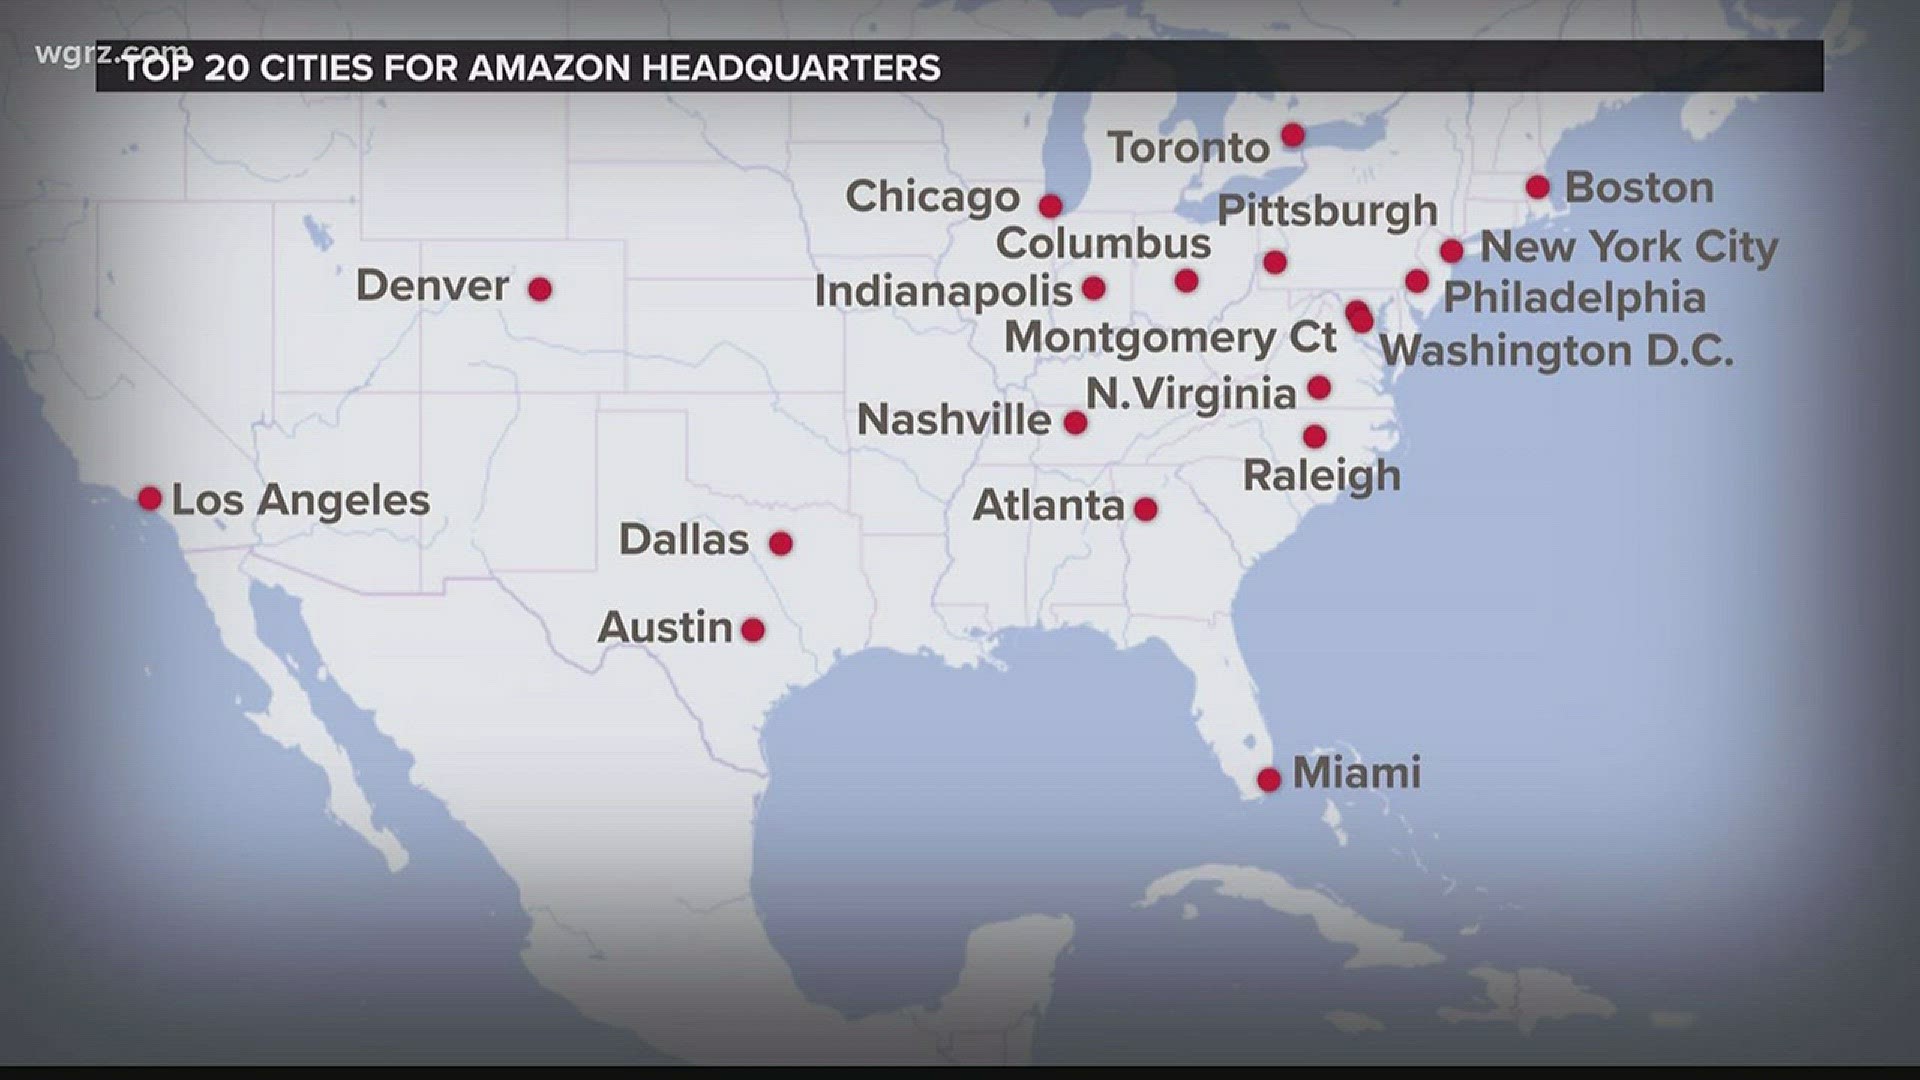 Buffalo Doesn't Make The Cut For Amazon HQ